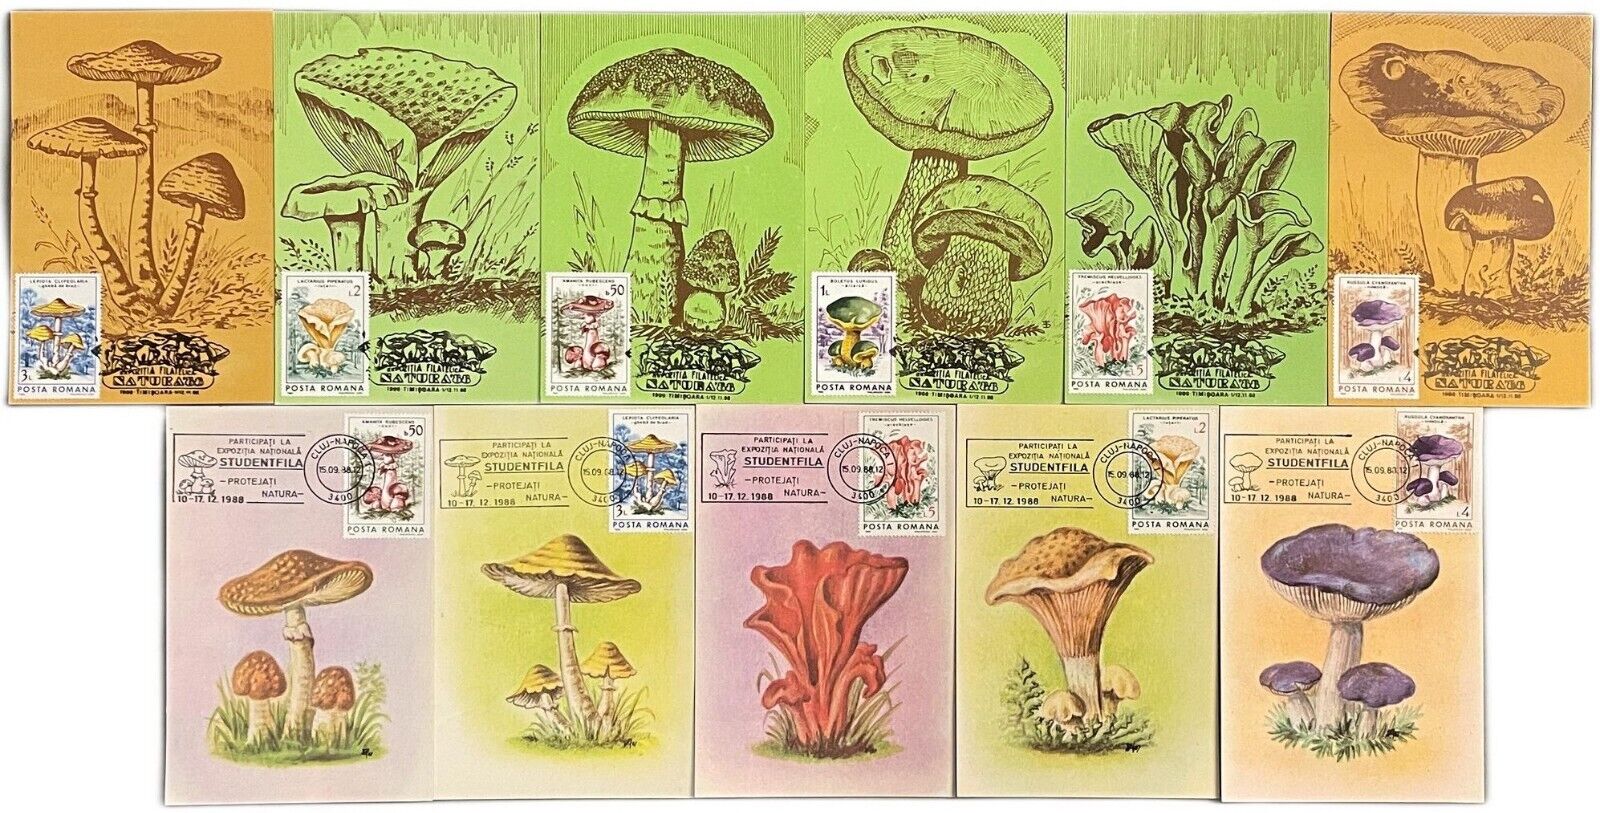 Romania set of 11 maximum cards 1988 mushrooms that can be eaten topic postcards